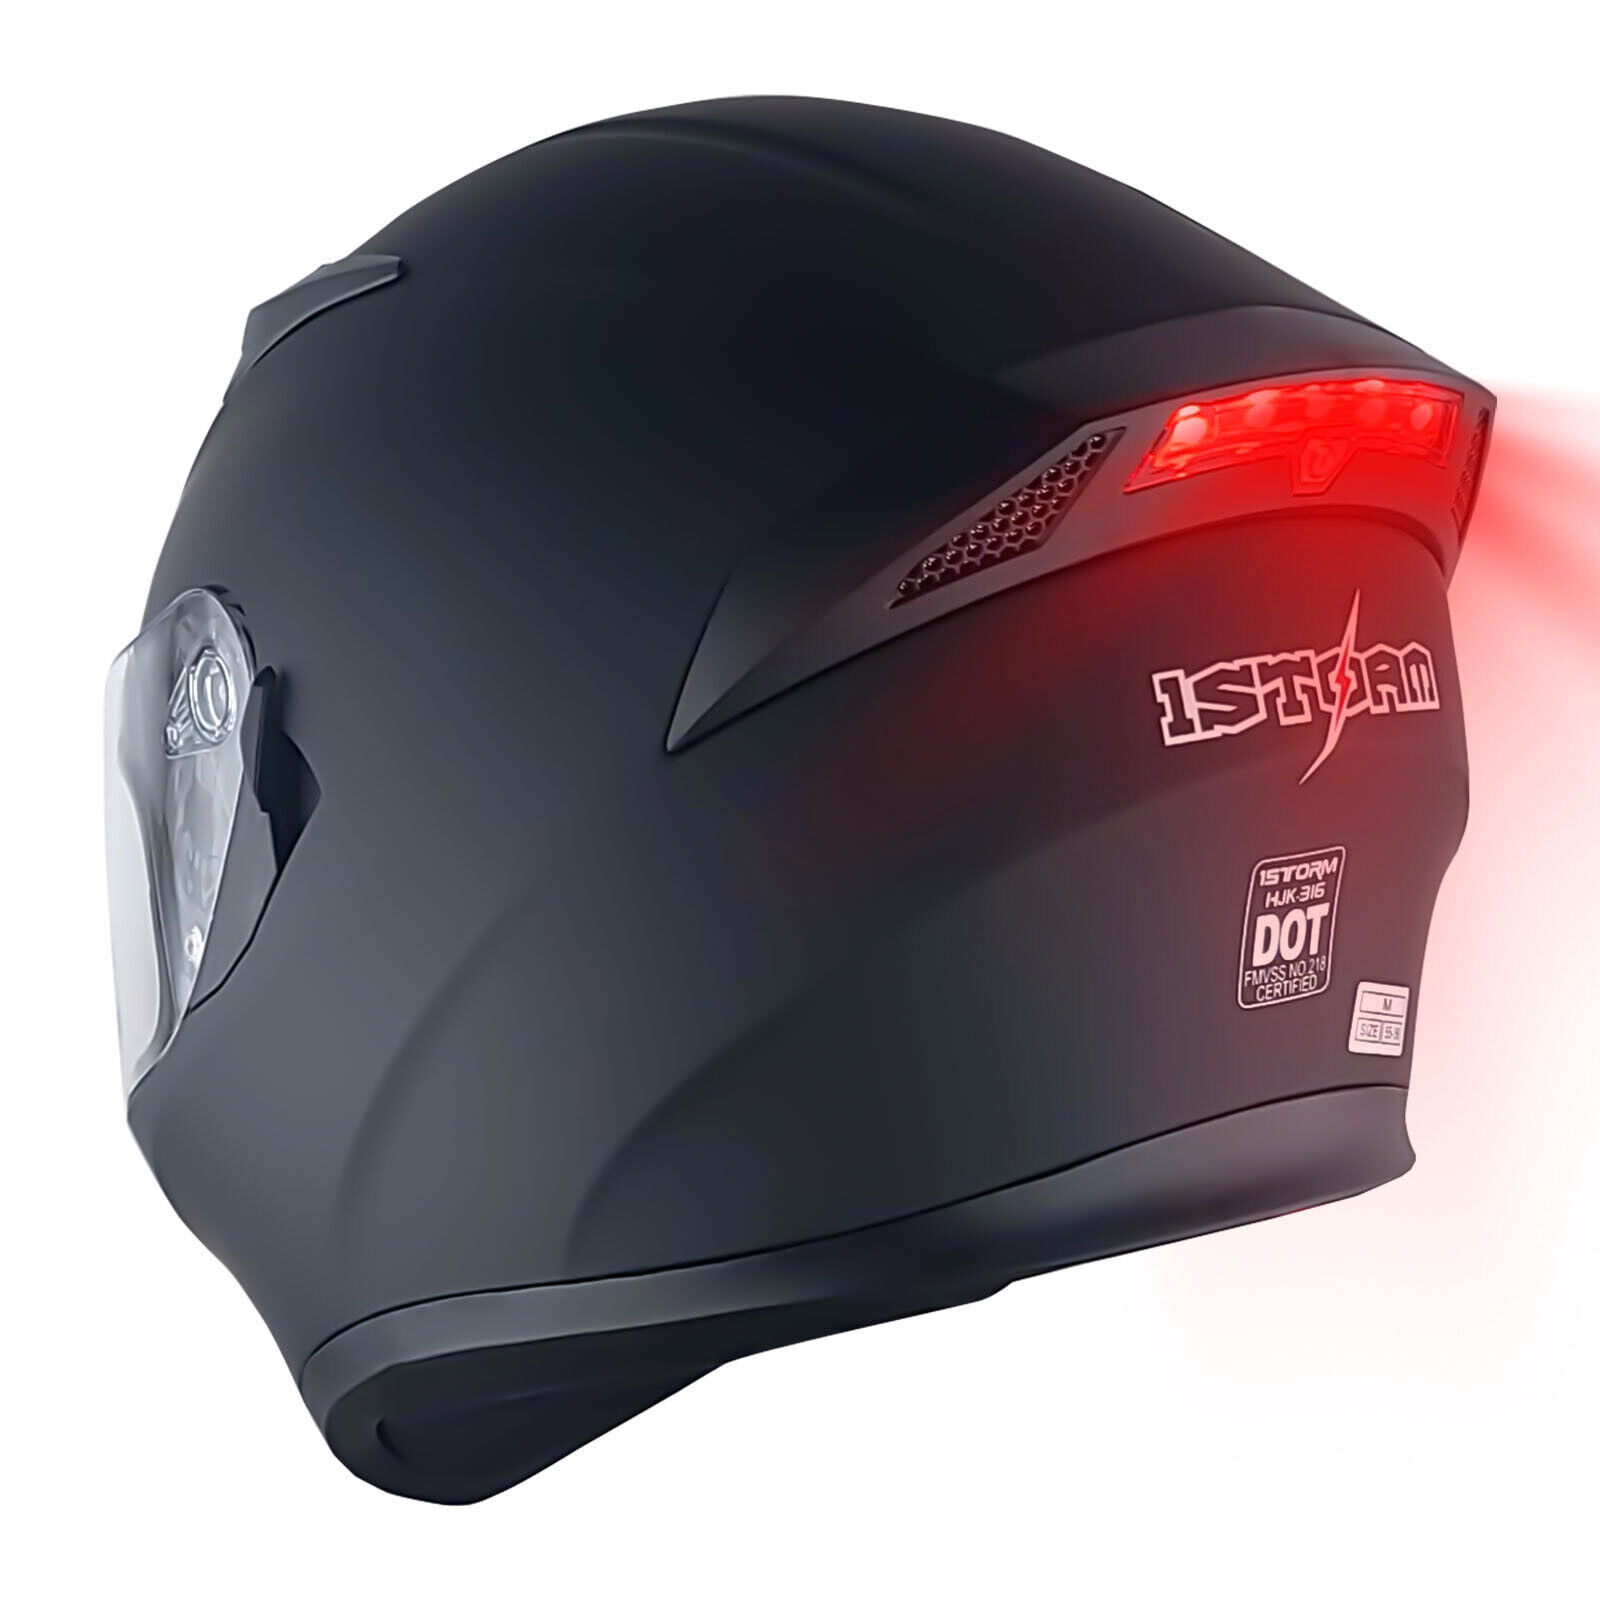 1Storm Motorcycle Dual Visor Full Face Helmet Mechanic with LED Tail Light